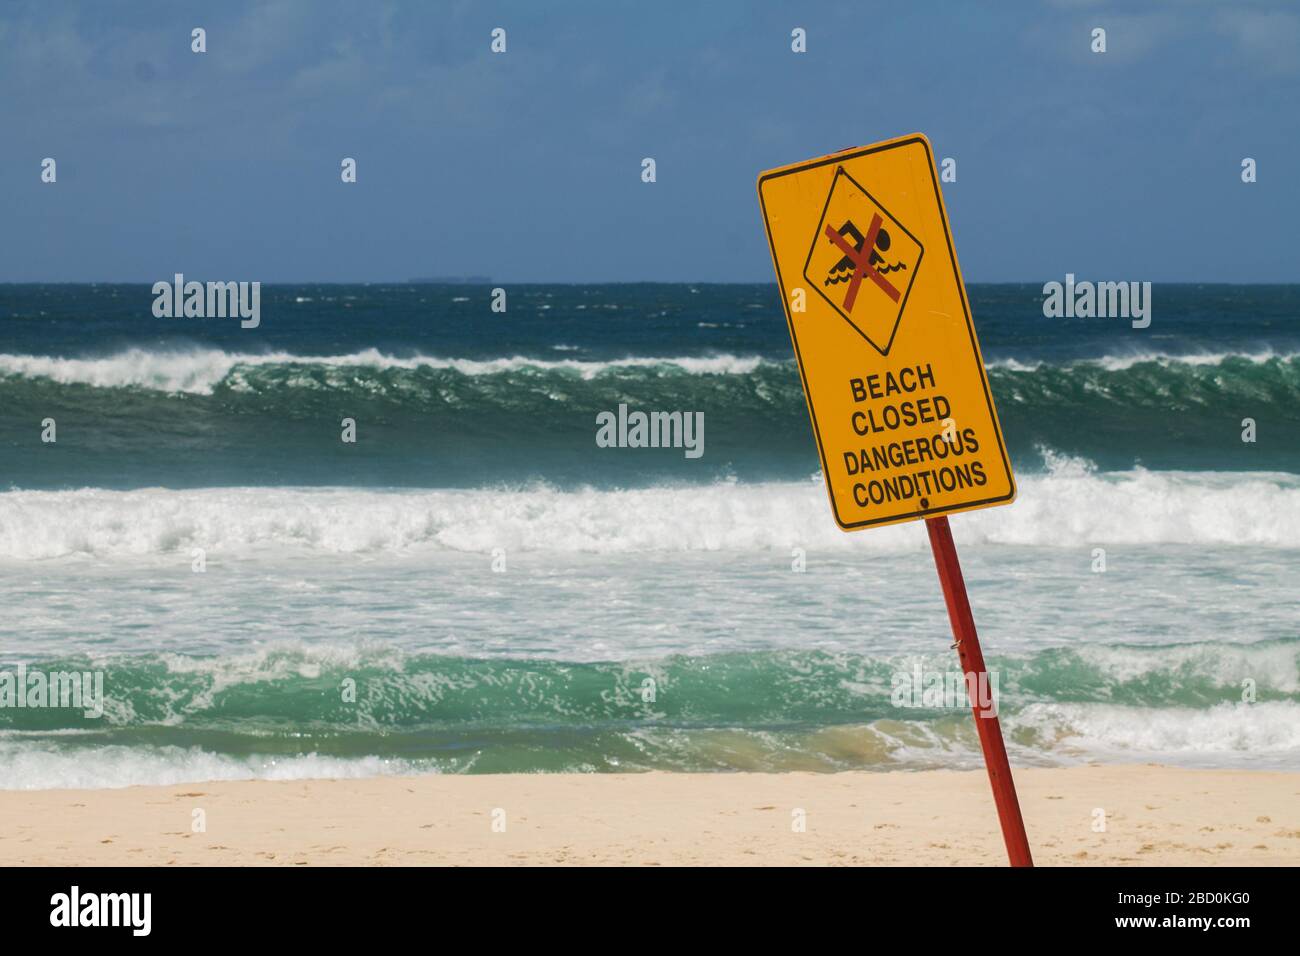 Beach closed sign at Maroubra Beach, Sydney, NSW, Australia. Stock Photo